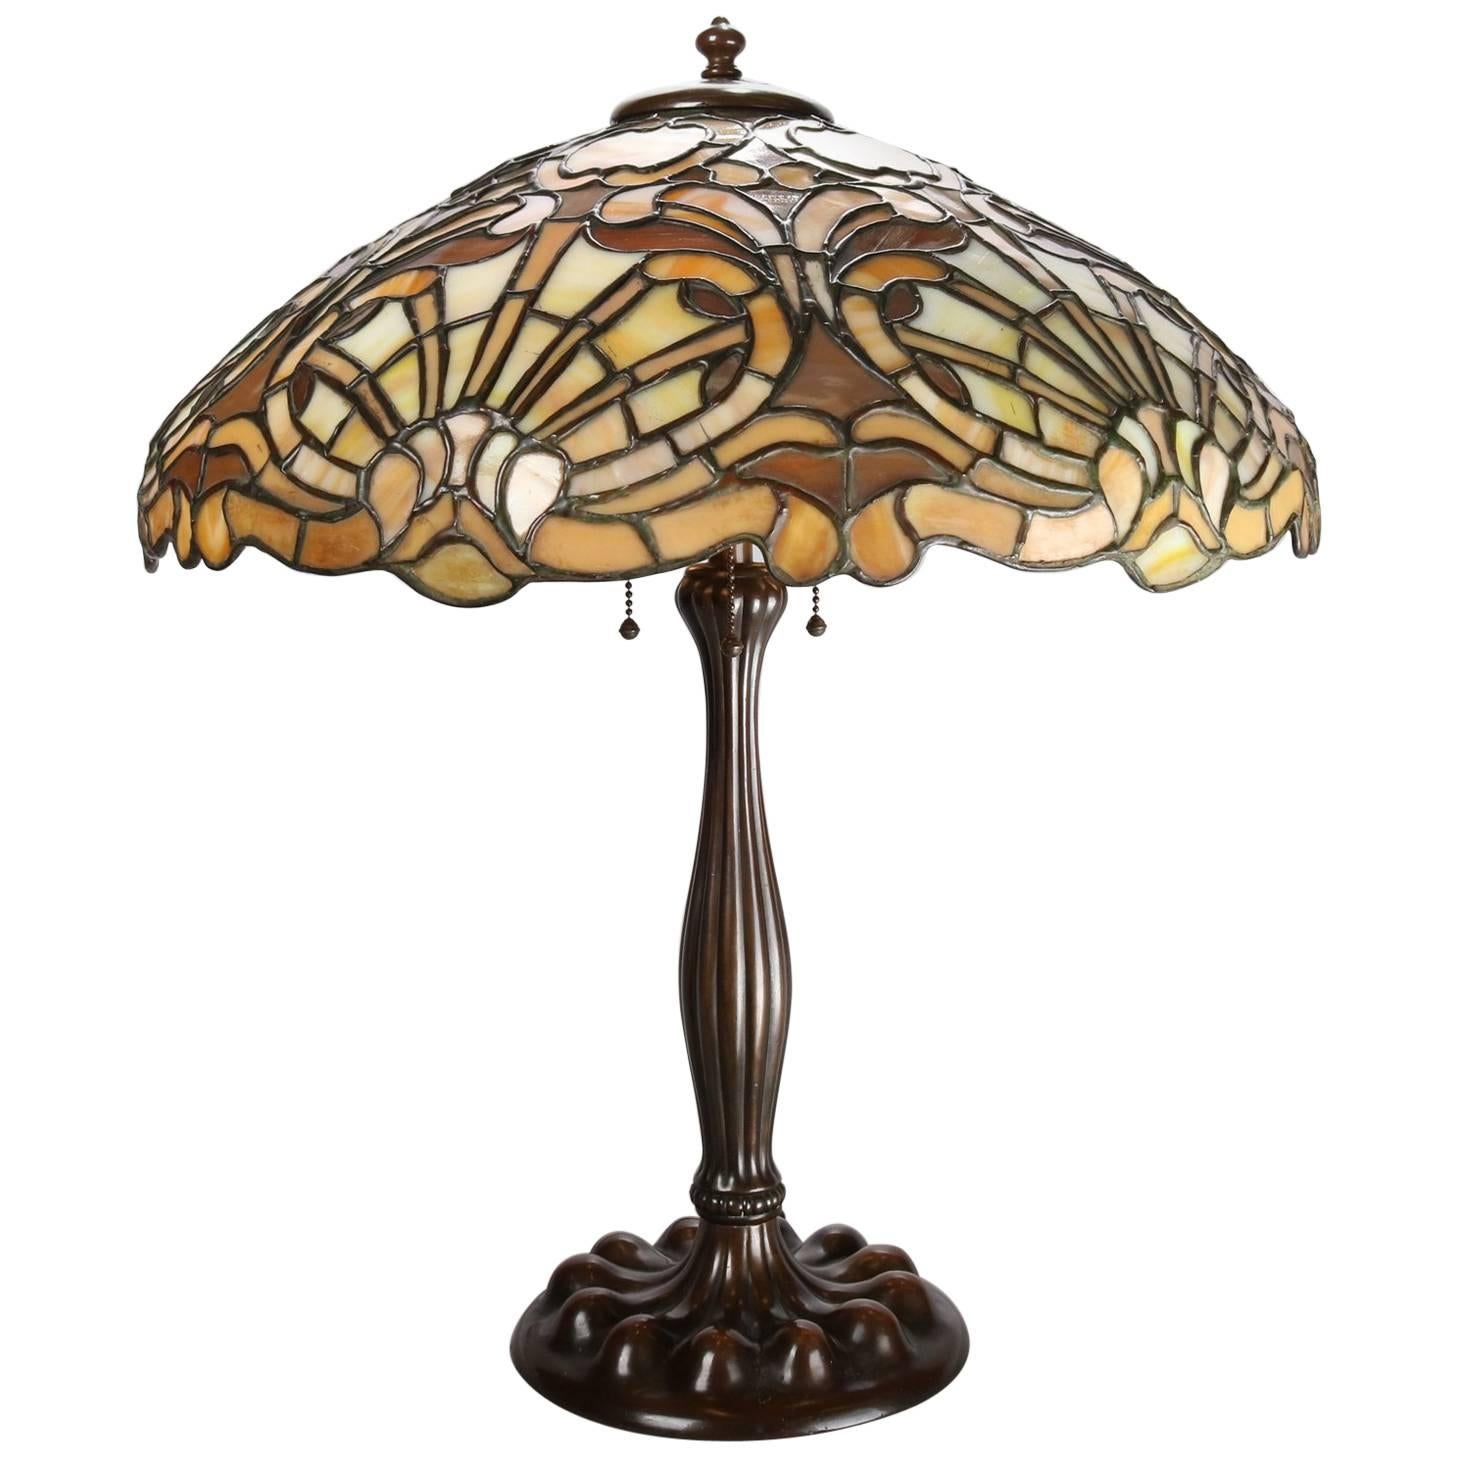 Antique Duffner & Kimberly Co. Art Nouveau Mosiac Glass Lamp, Shell Motif